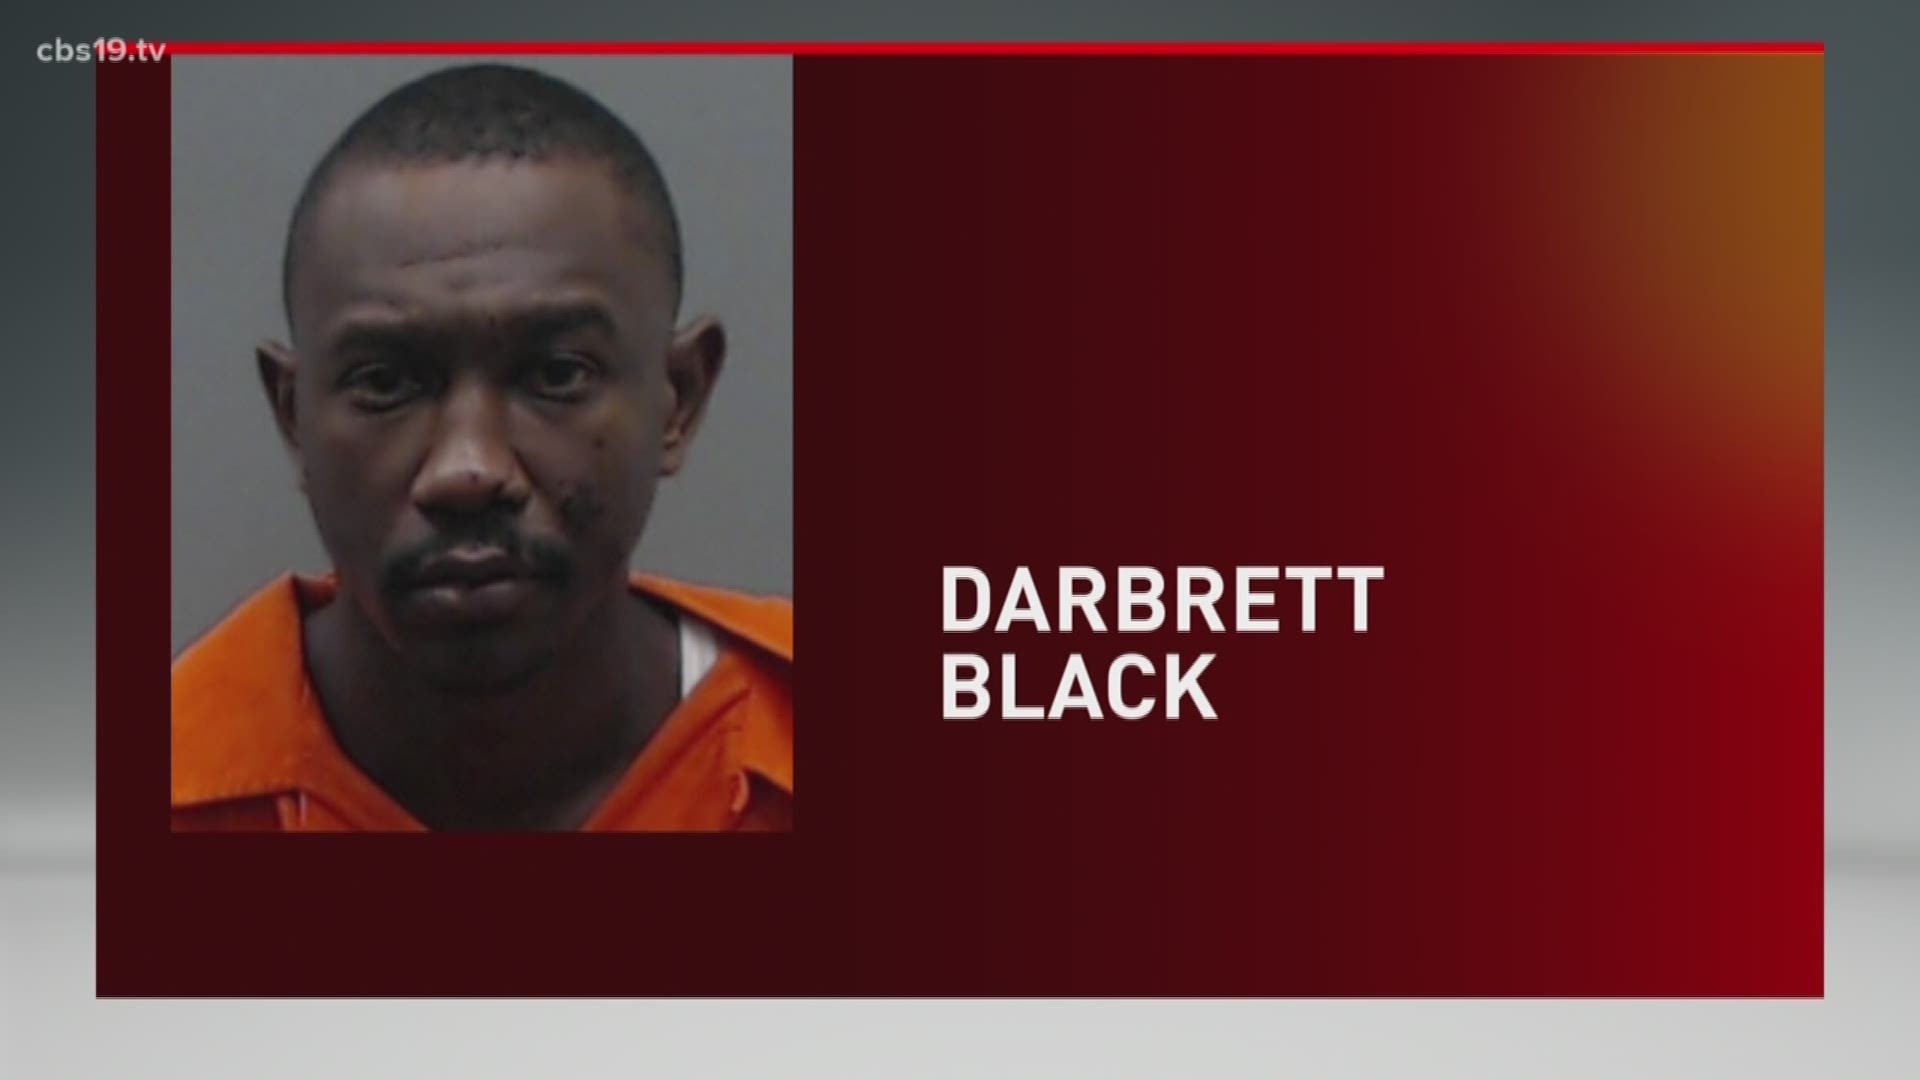 Dabrett Black was taken into custody after investigators said he shot a state trooper